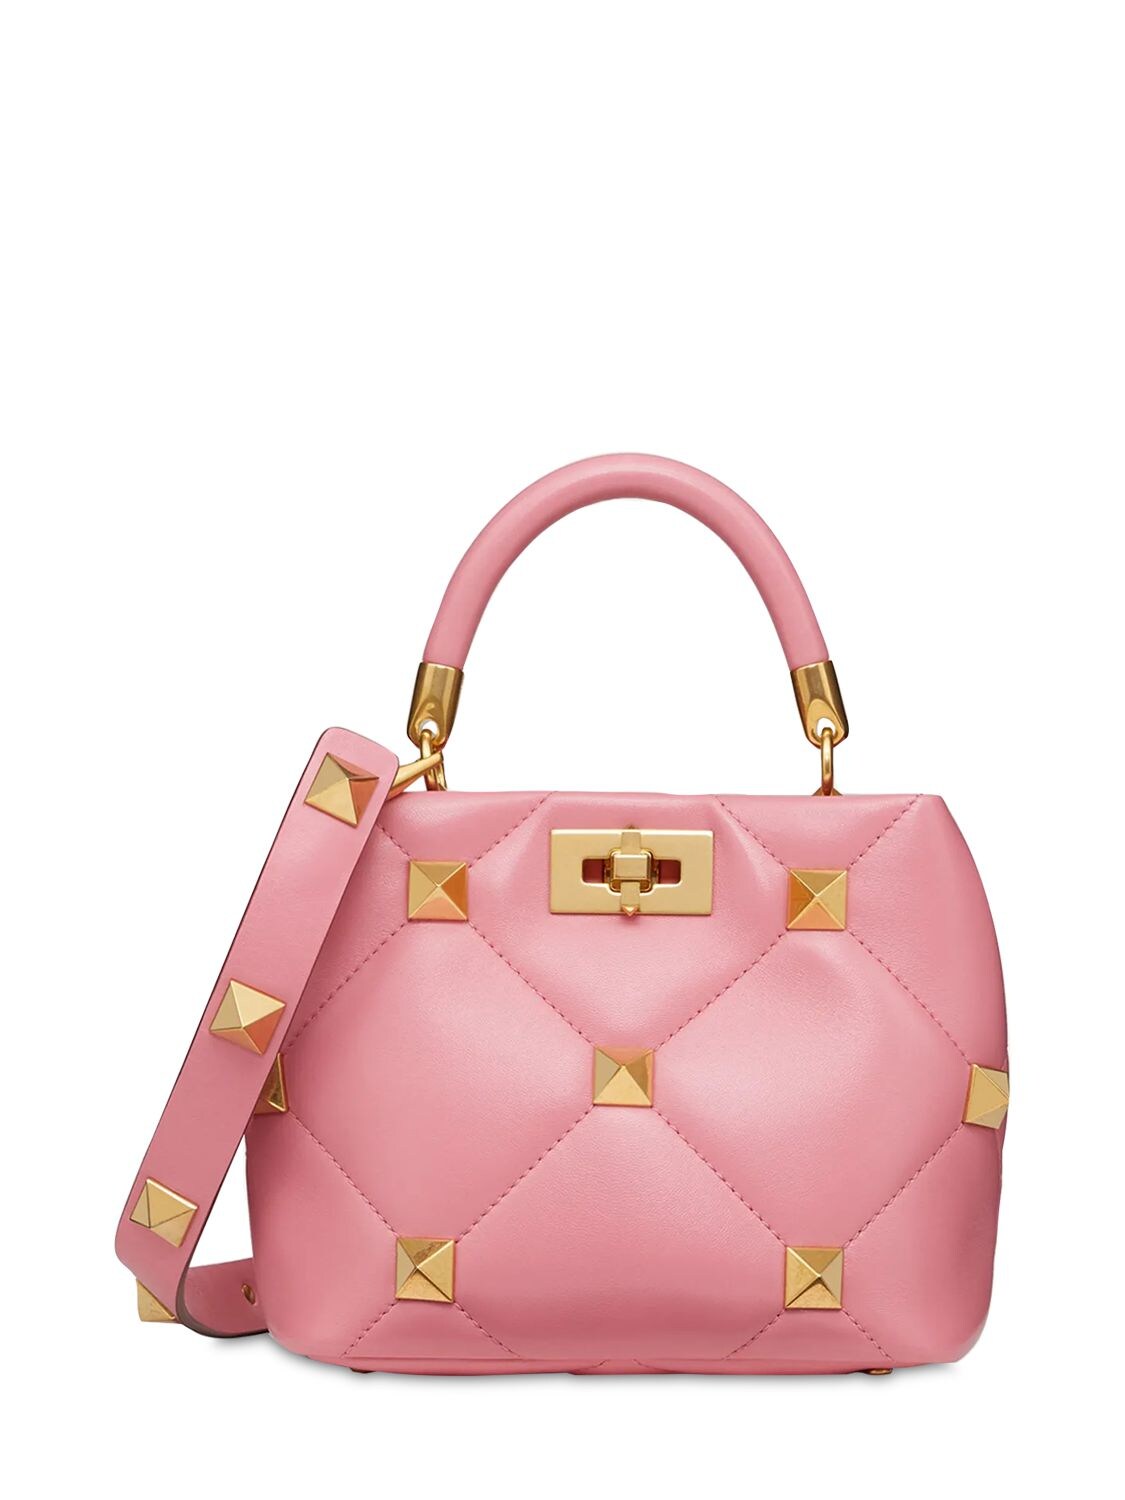 Valentino Garavani Small Roman Studded Leather Bag In Flamingo Pink ...